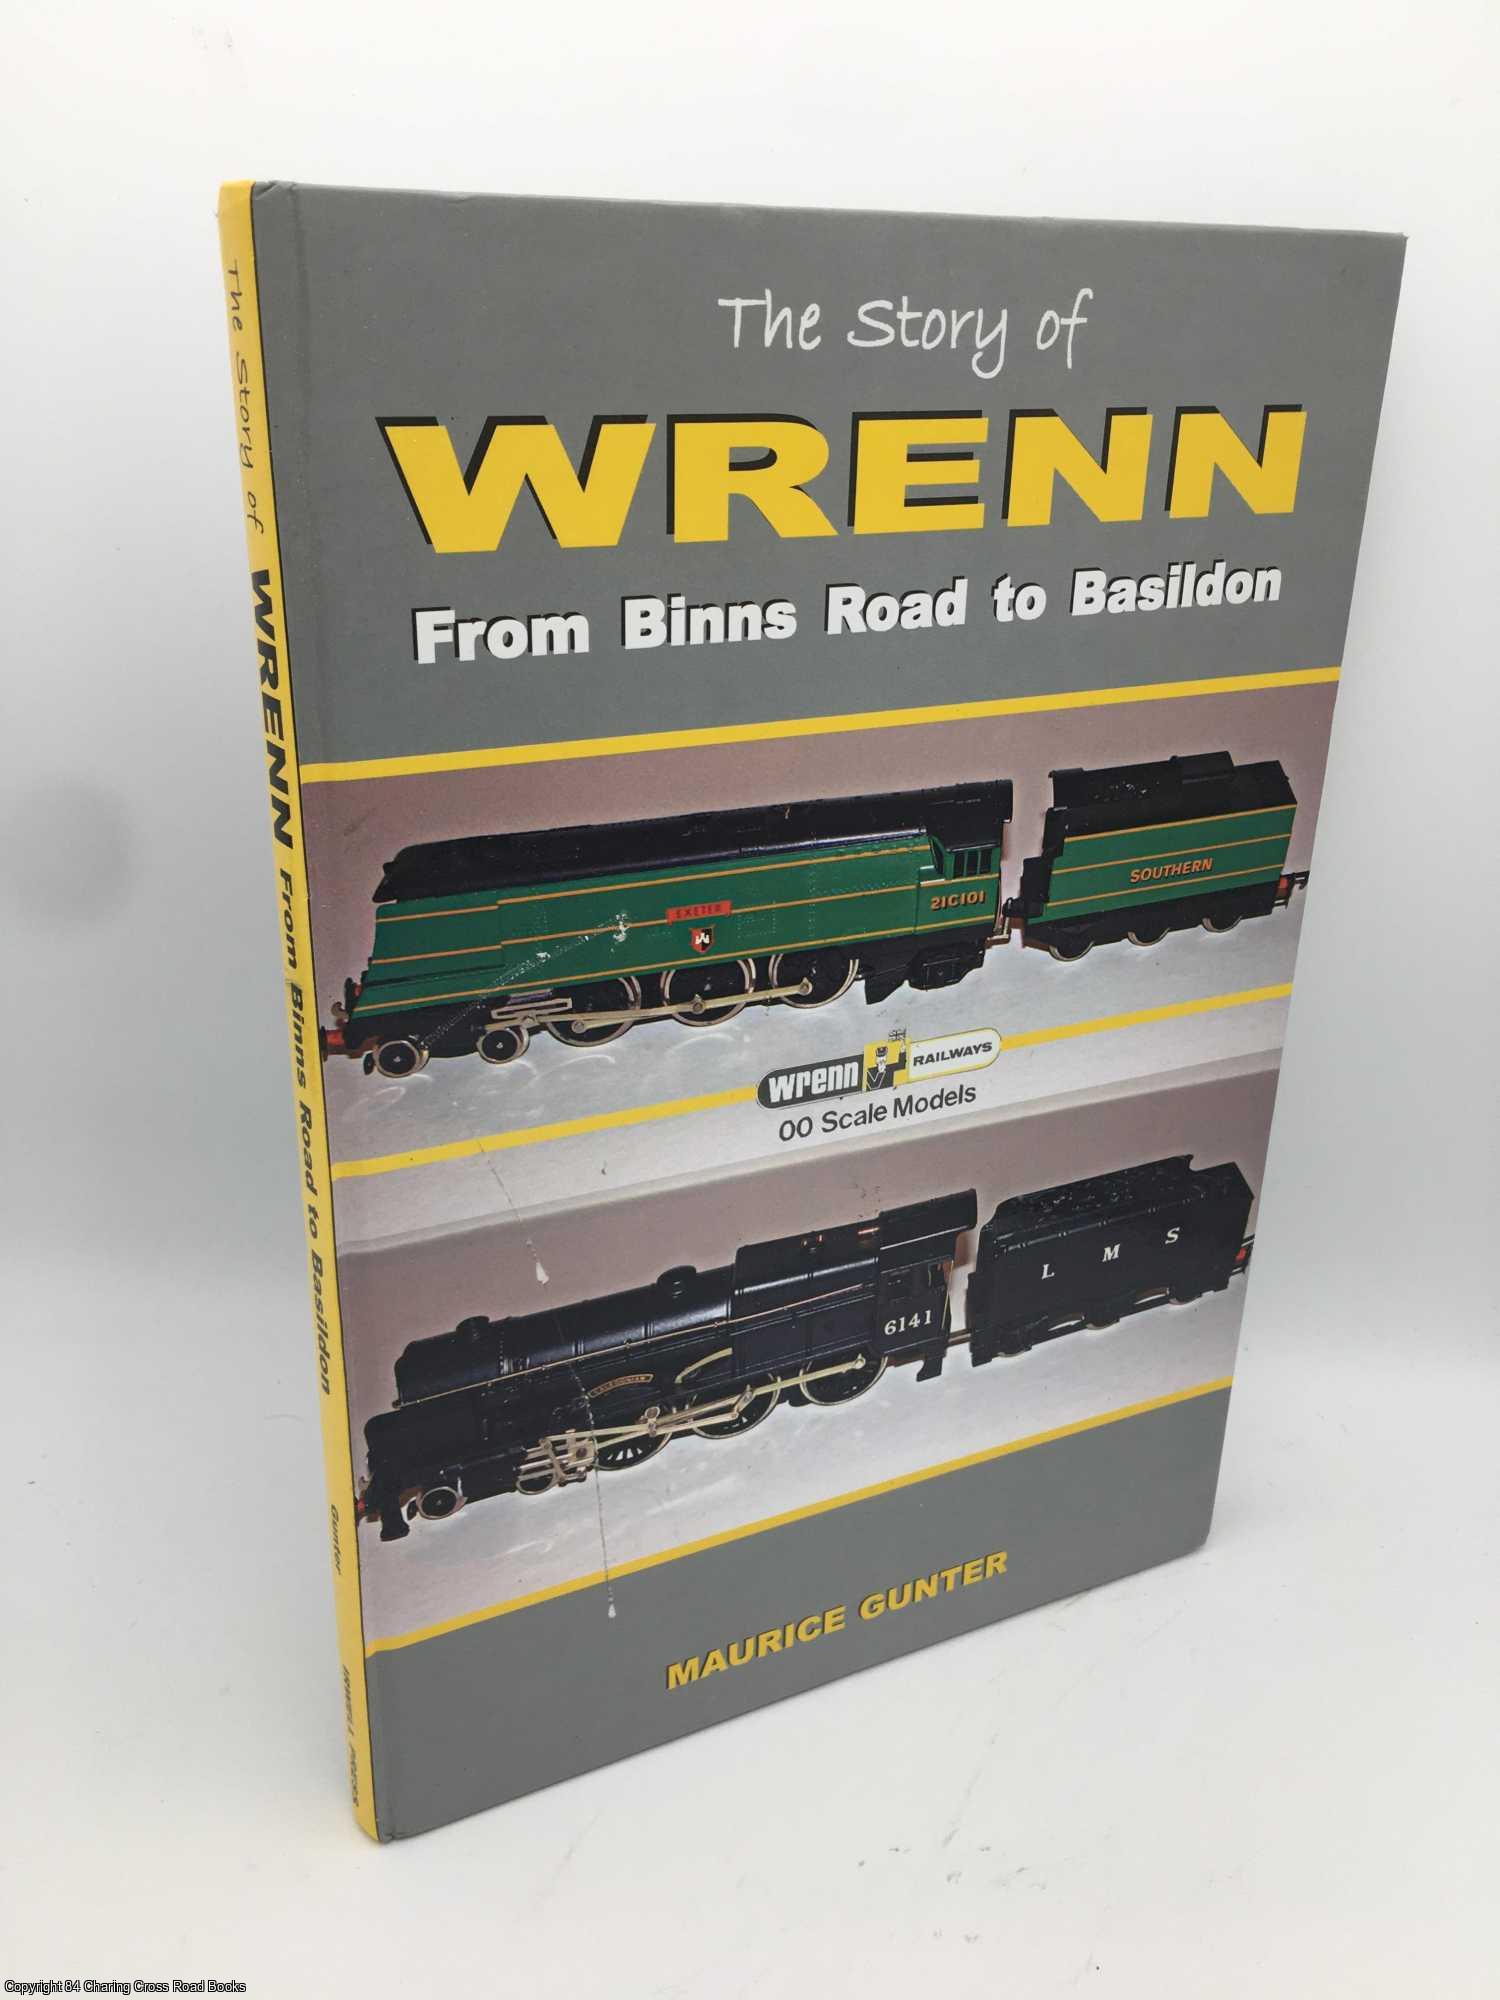 Maurice, Gunter - The Story of Wrenn: From Binns Road to Basildon